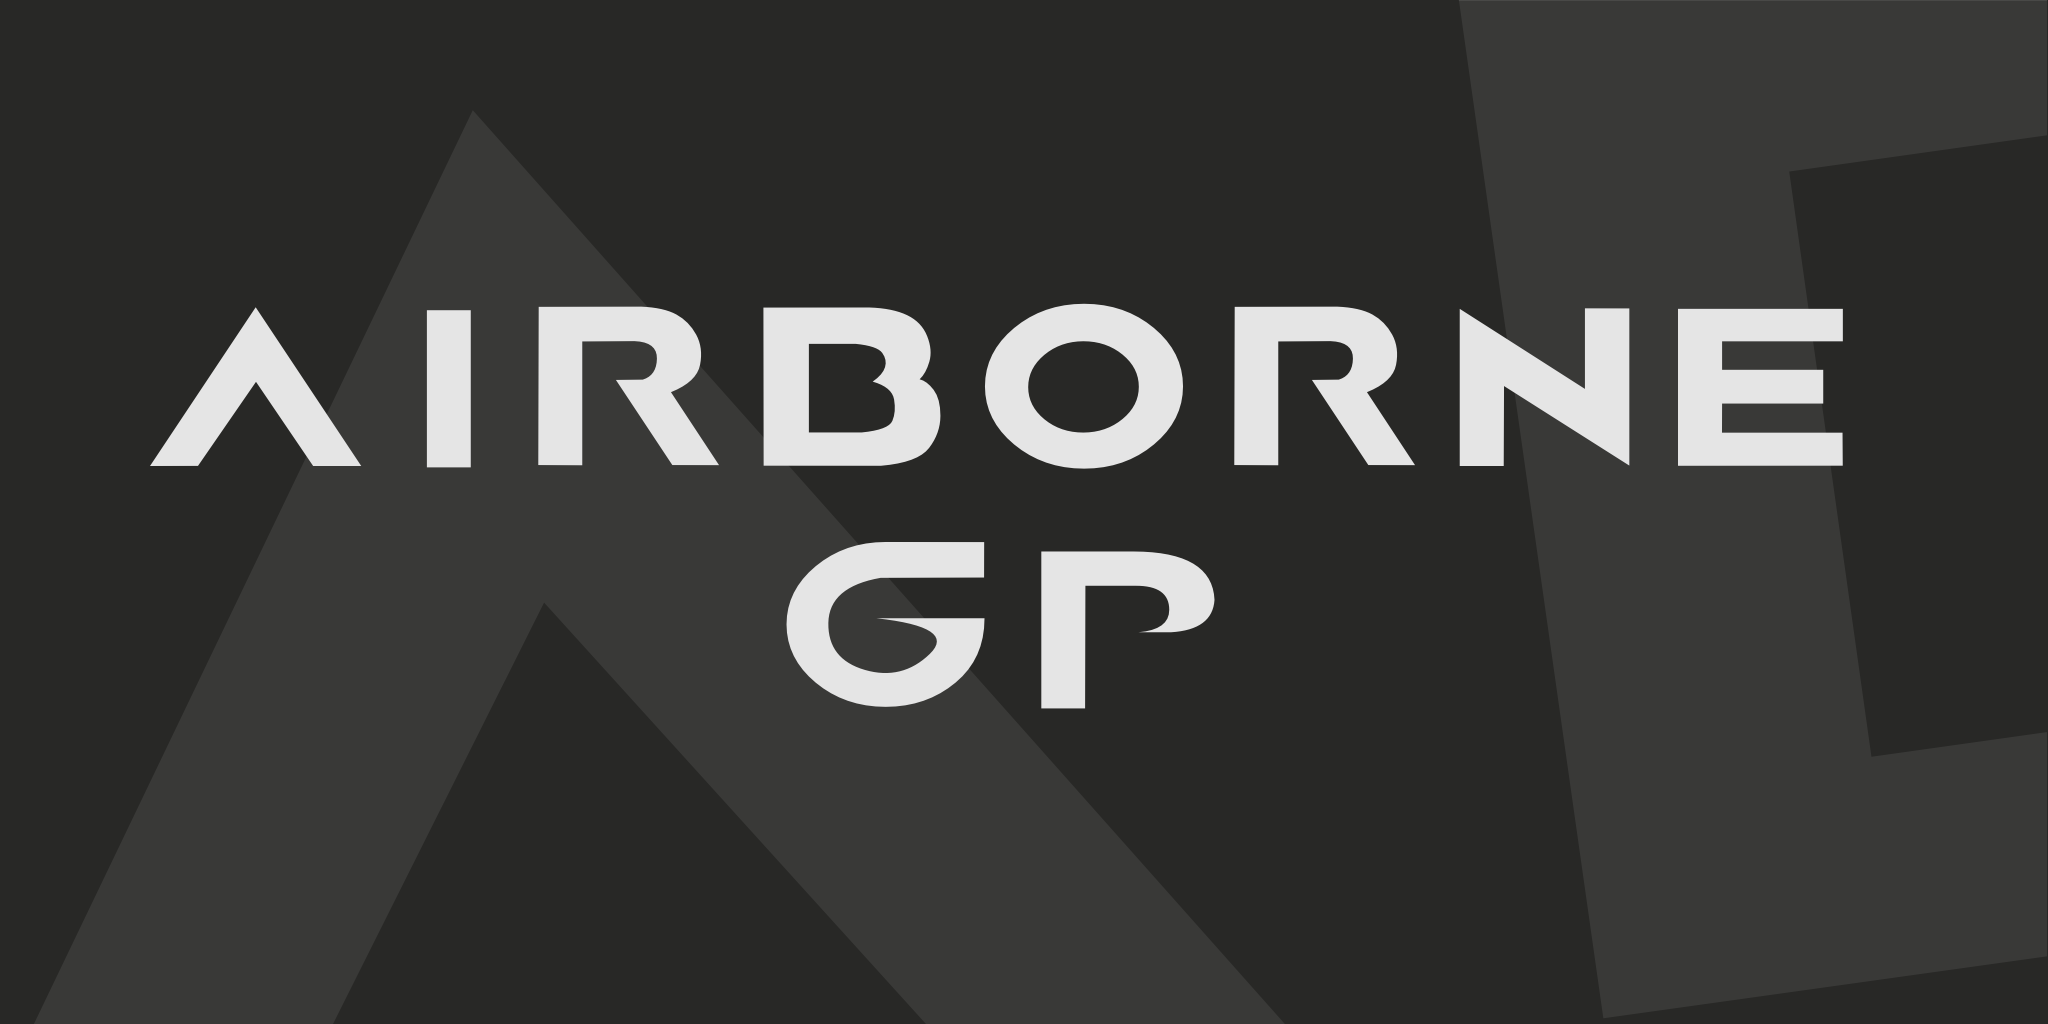 Airbone Gp